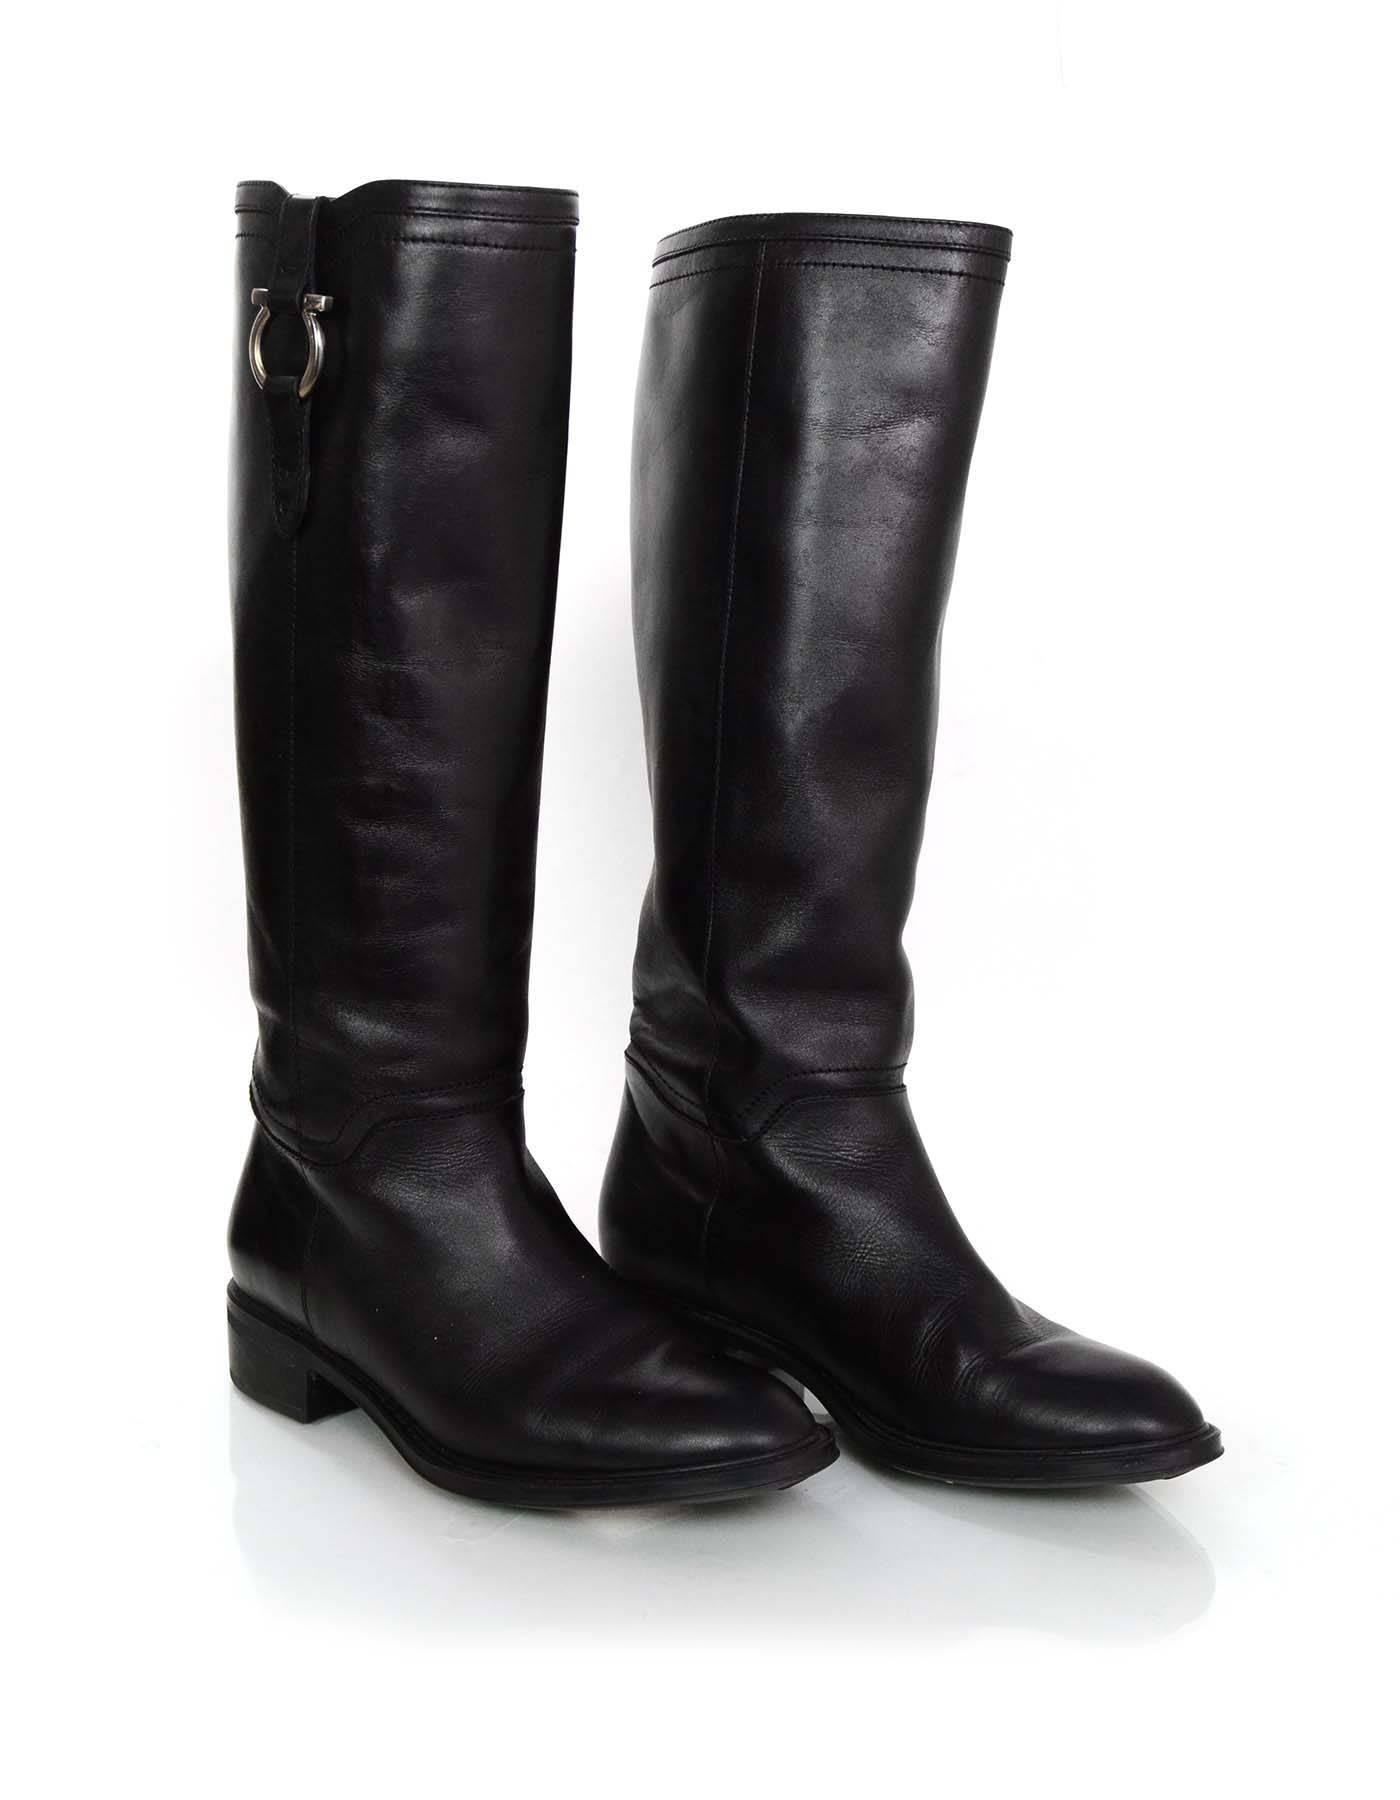 Women's Salvatore Ferragamo Black Leather Boots Sz 5.5